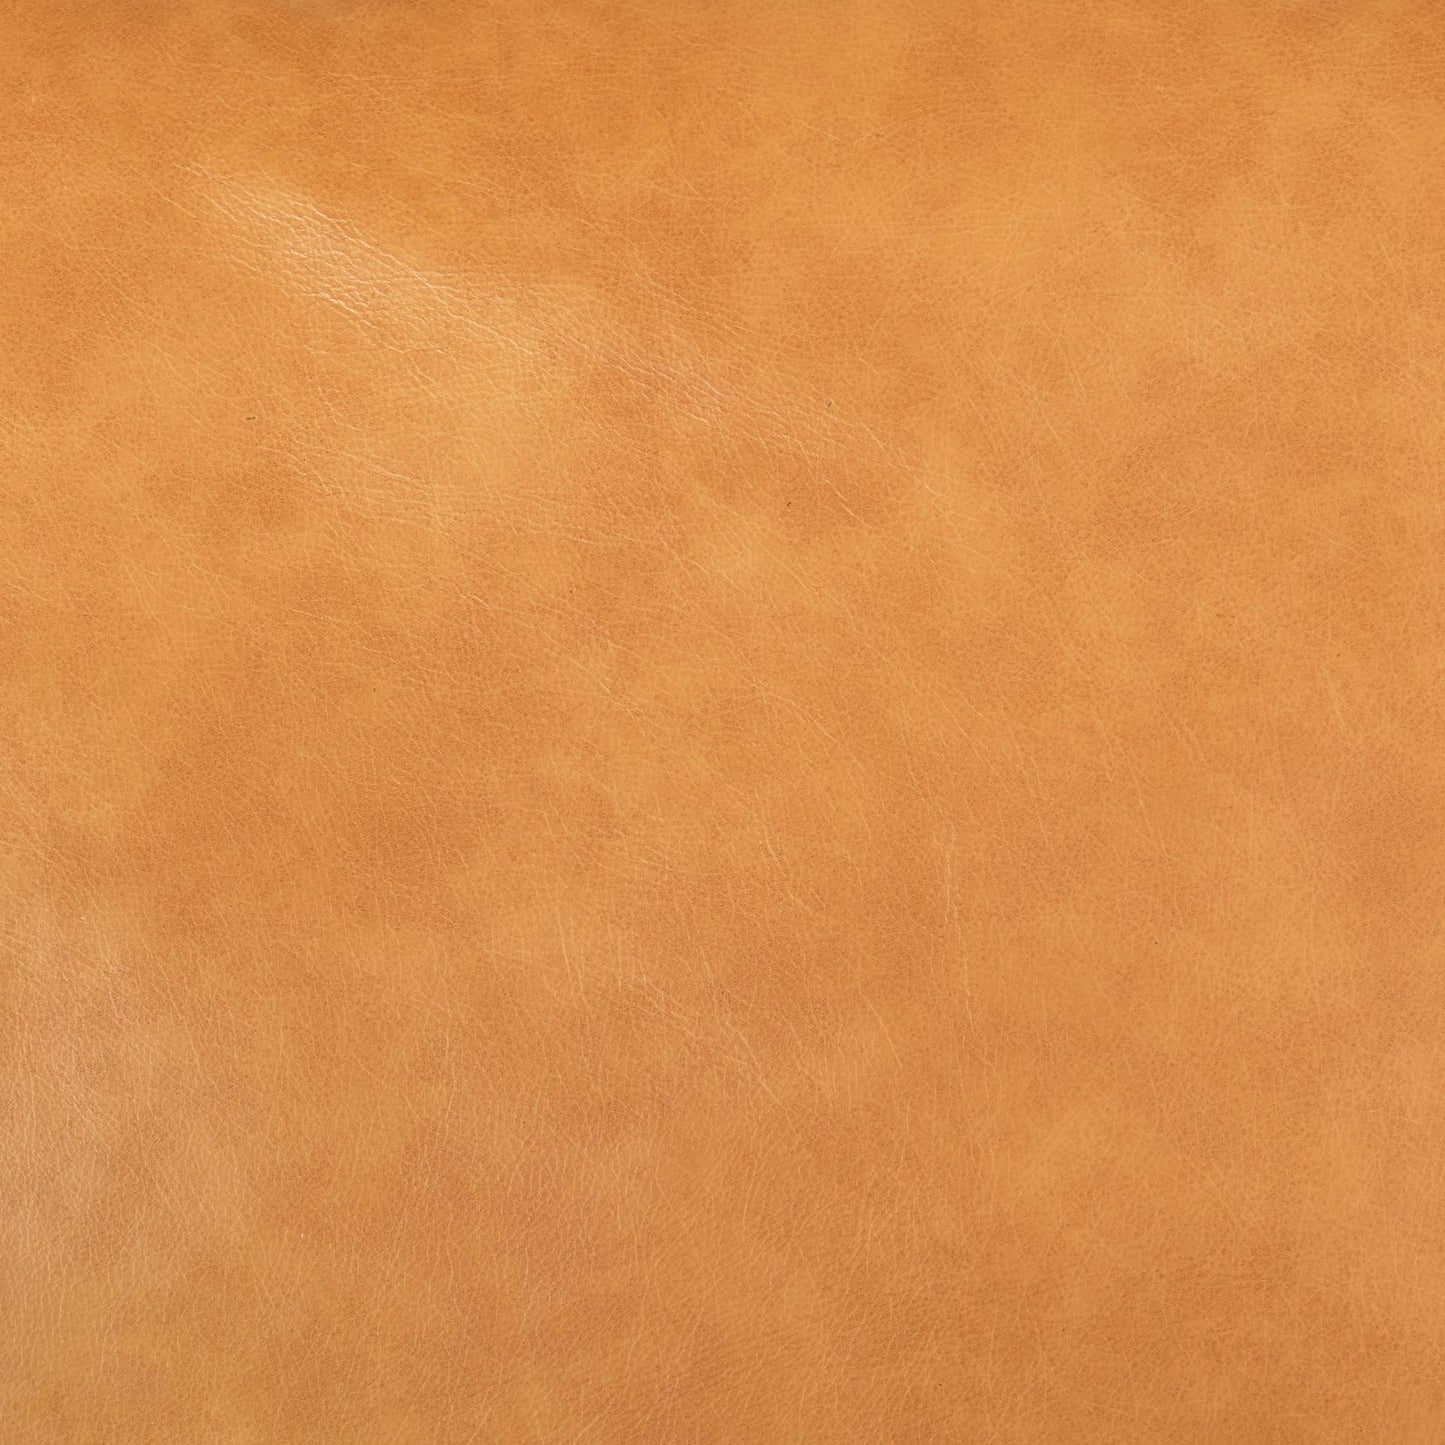 Elton 87.8L x 37.8W x 34.6H Tan Leather Sofa